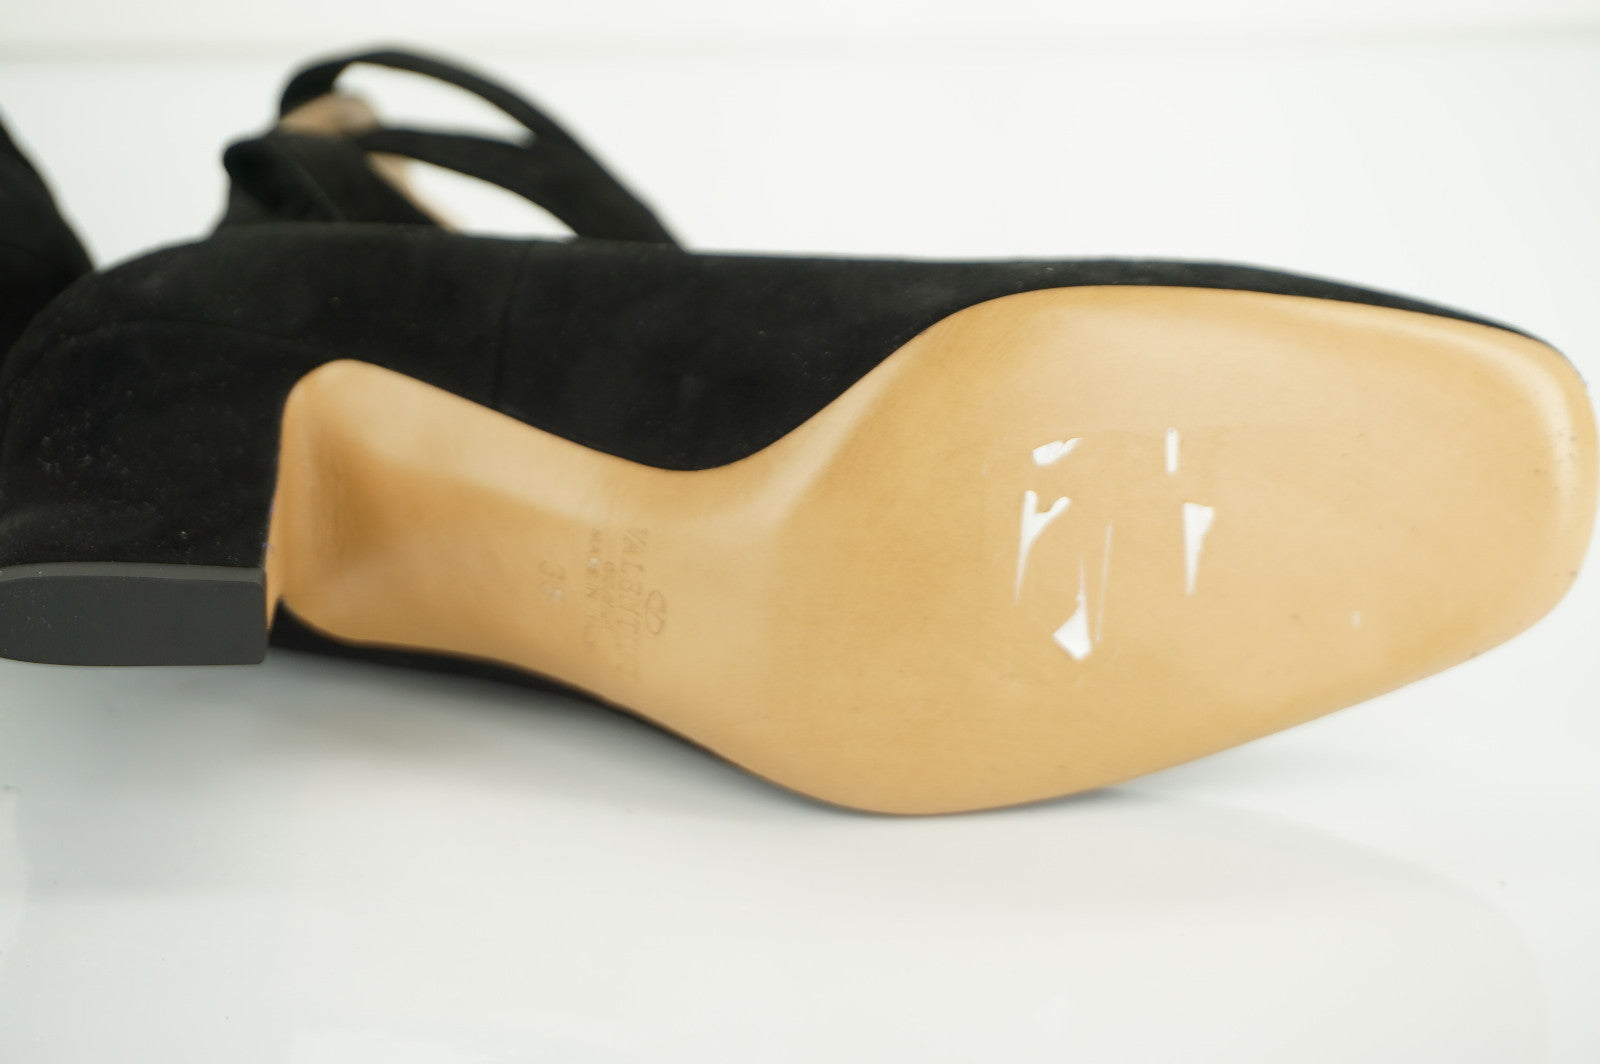 Size 38 Valentino Plum Ankle Wrap Block Heel Sandal Black Suede $995 NIB